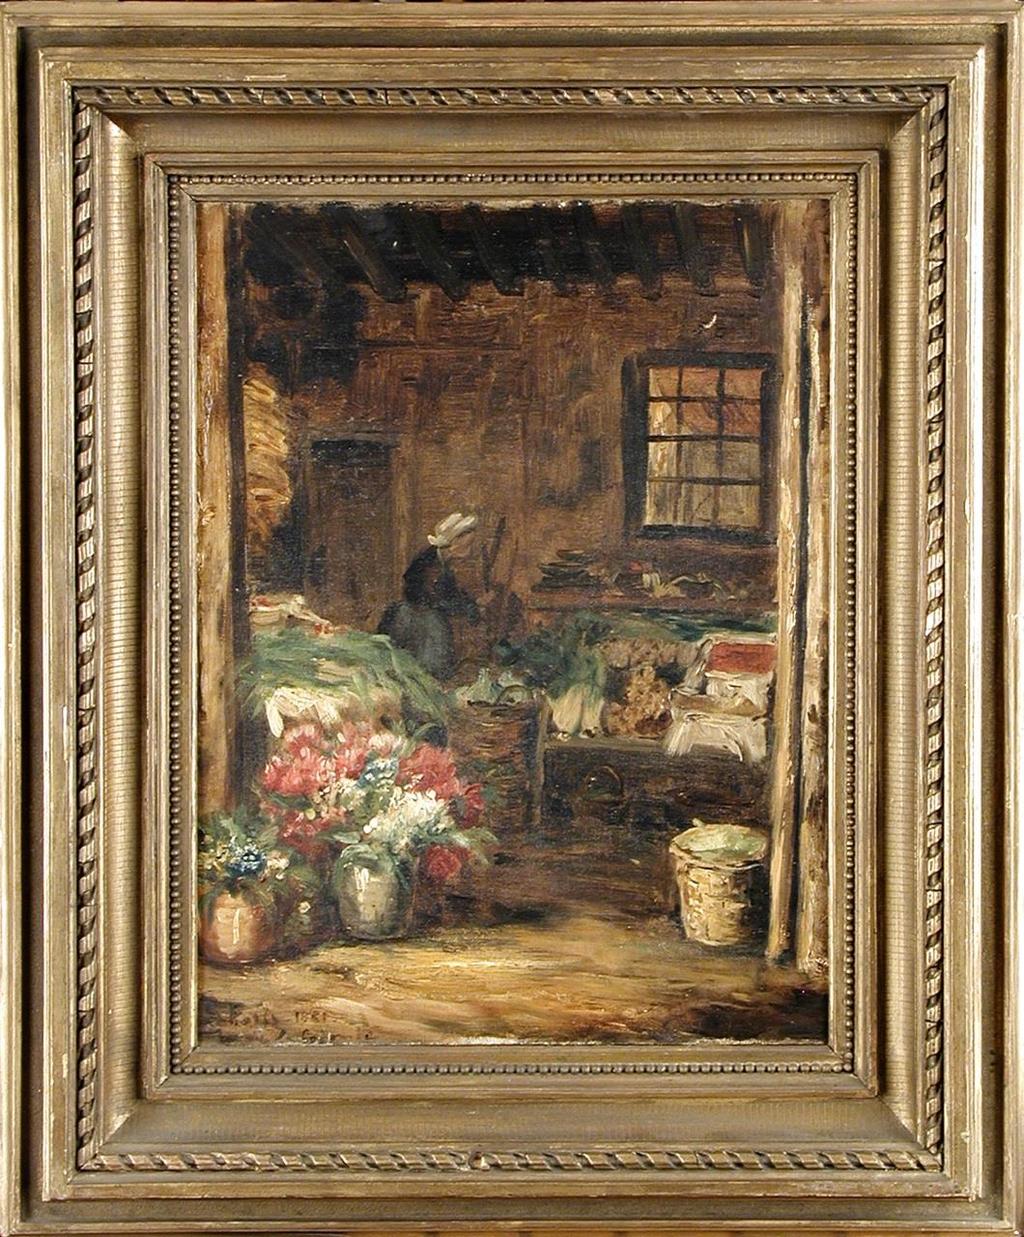 Boutique de fleuriste de Paris (Květinářský krám v Paříži), 1881, huile sur bois.